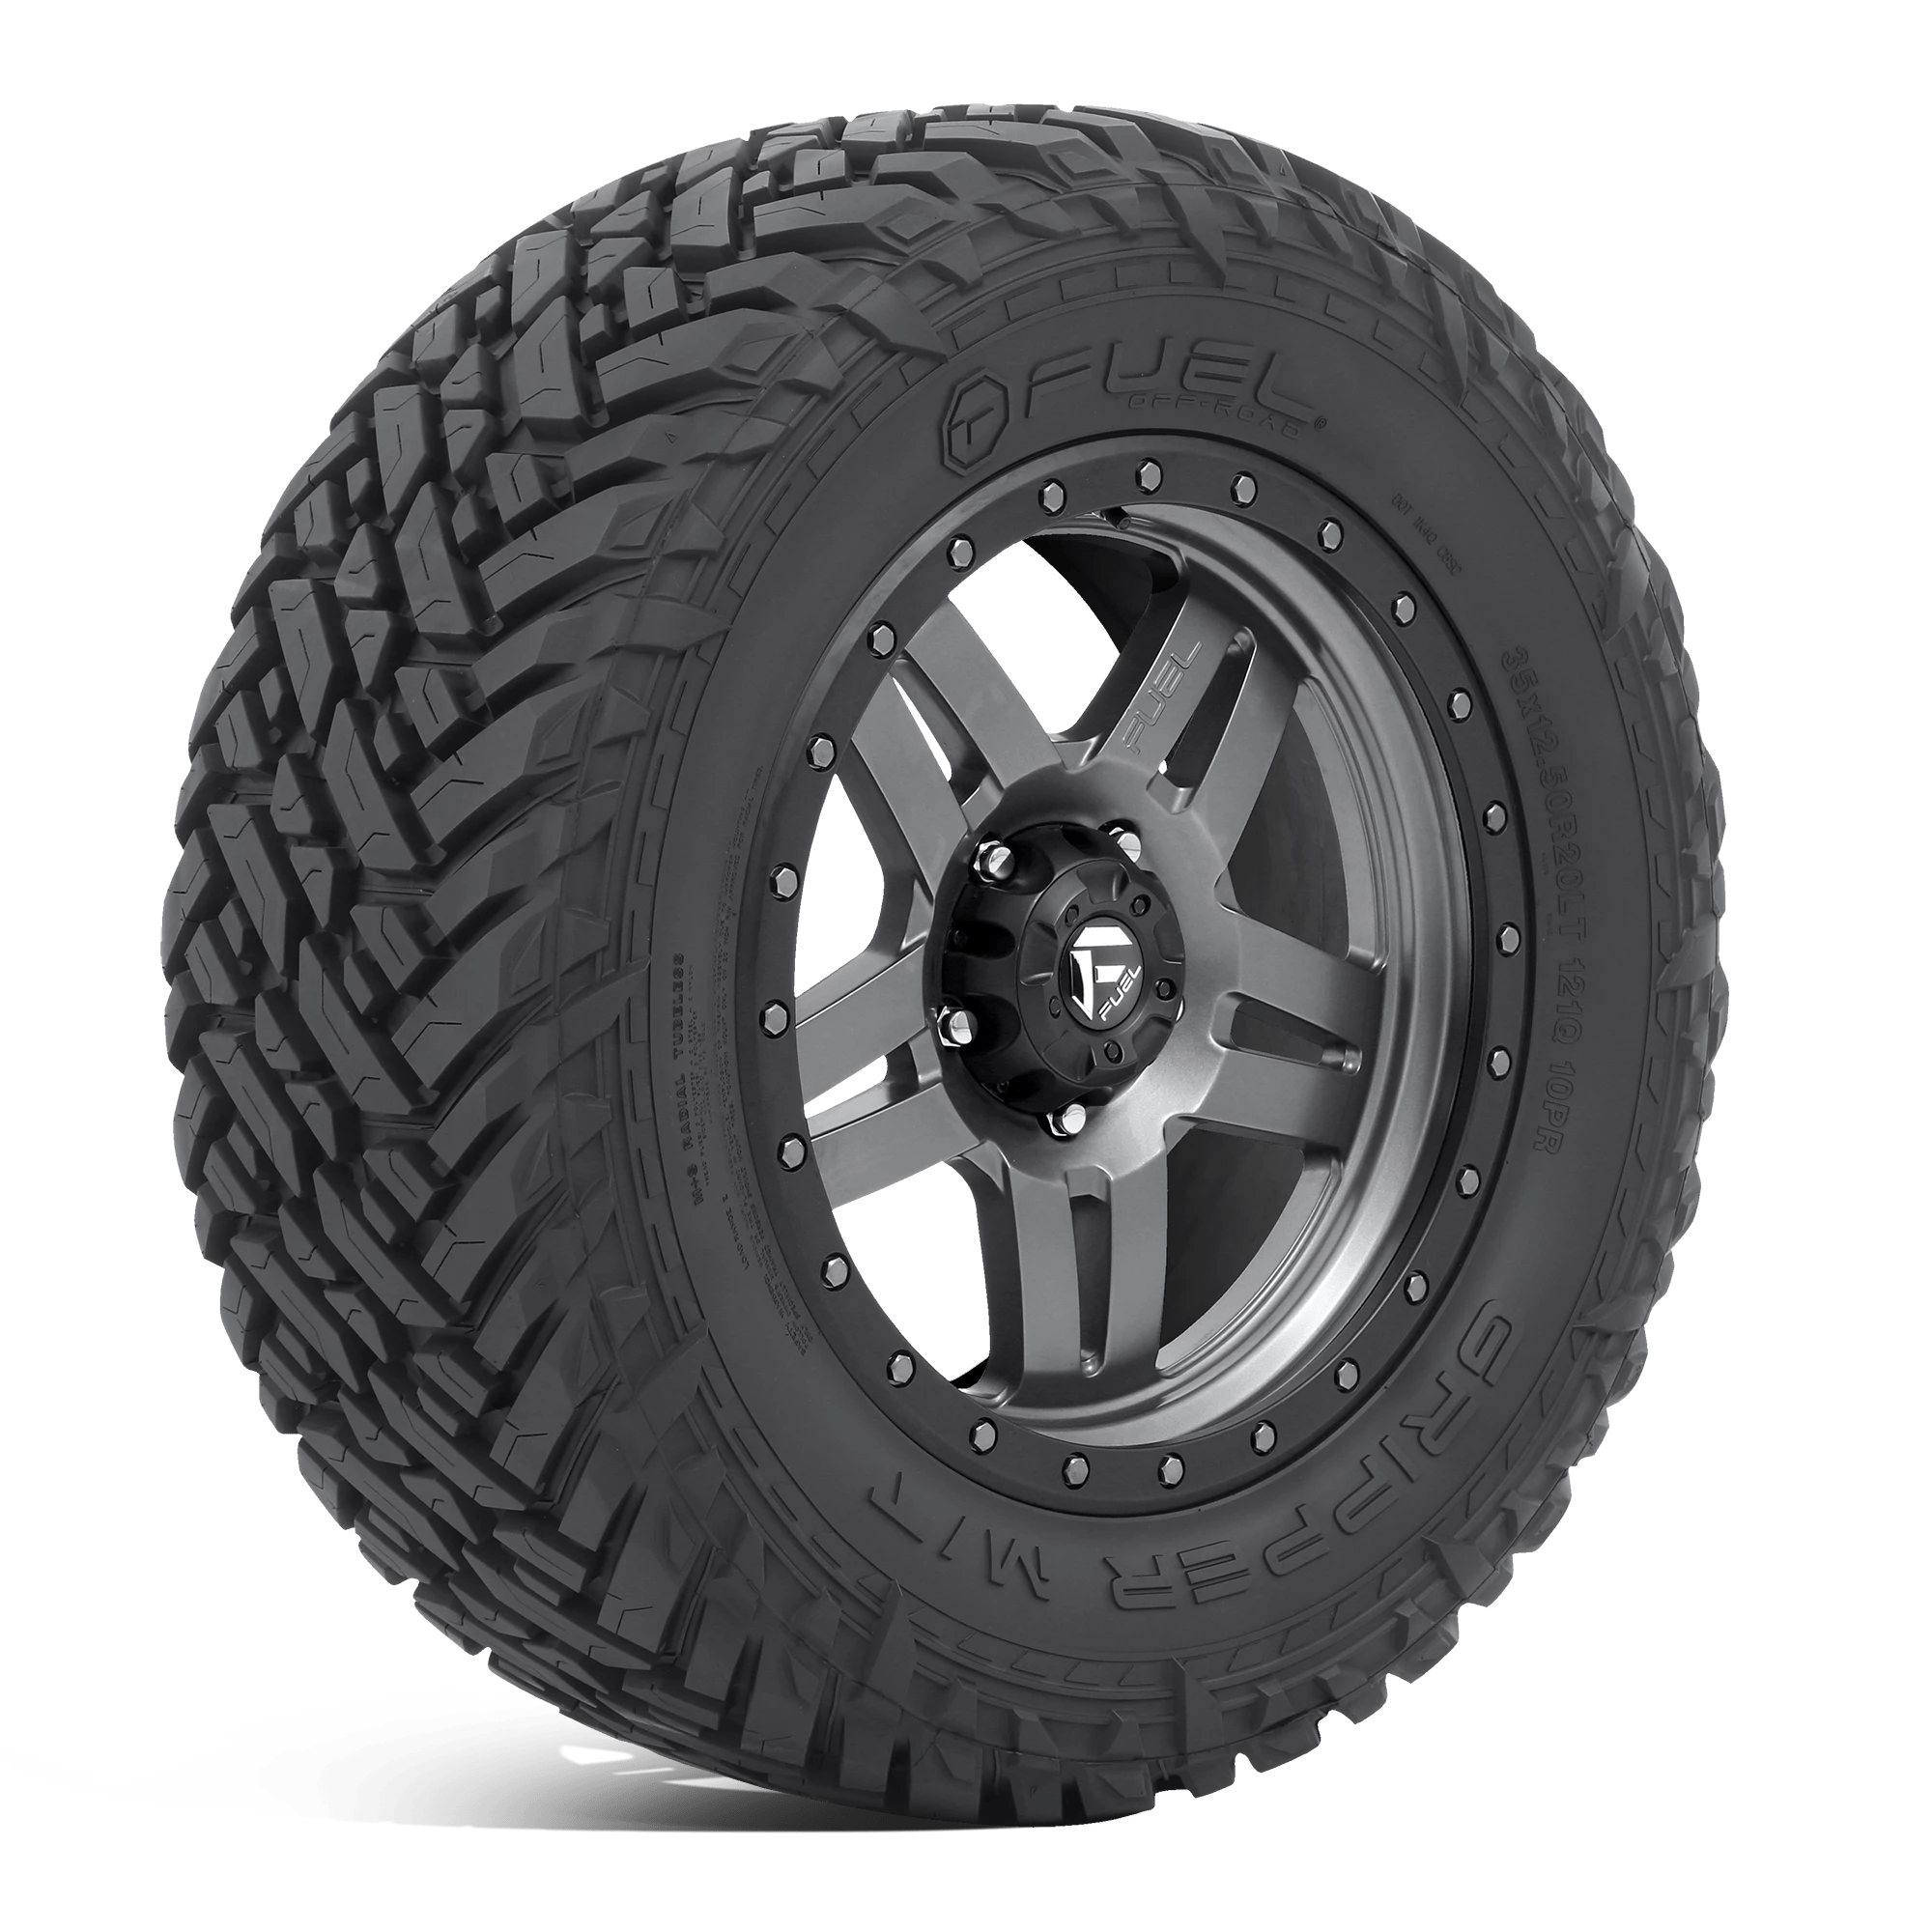 FUEL MUD GRIPPER LT35X12.50R17 Tires